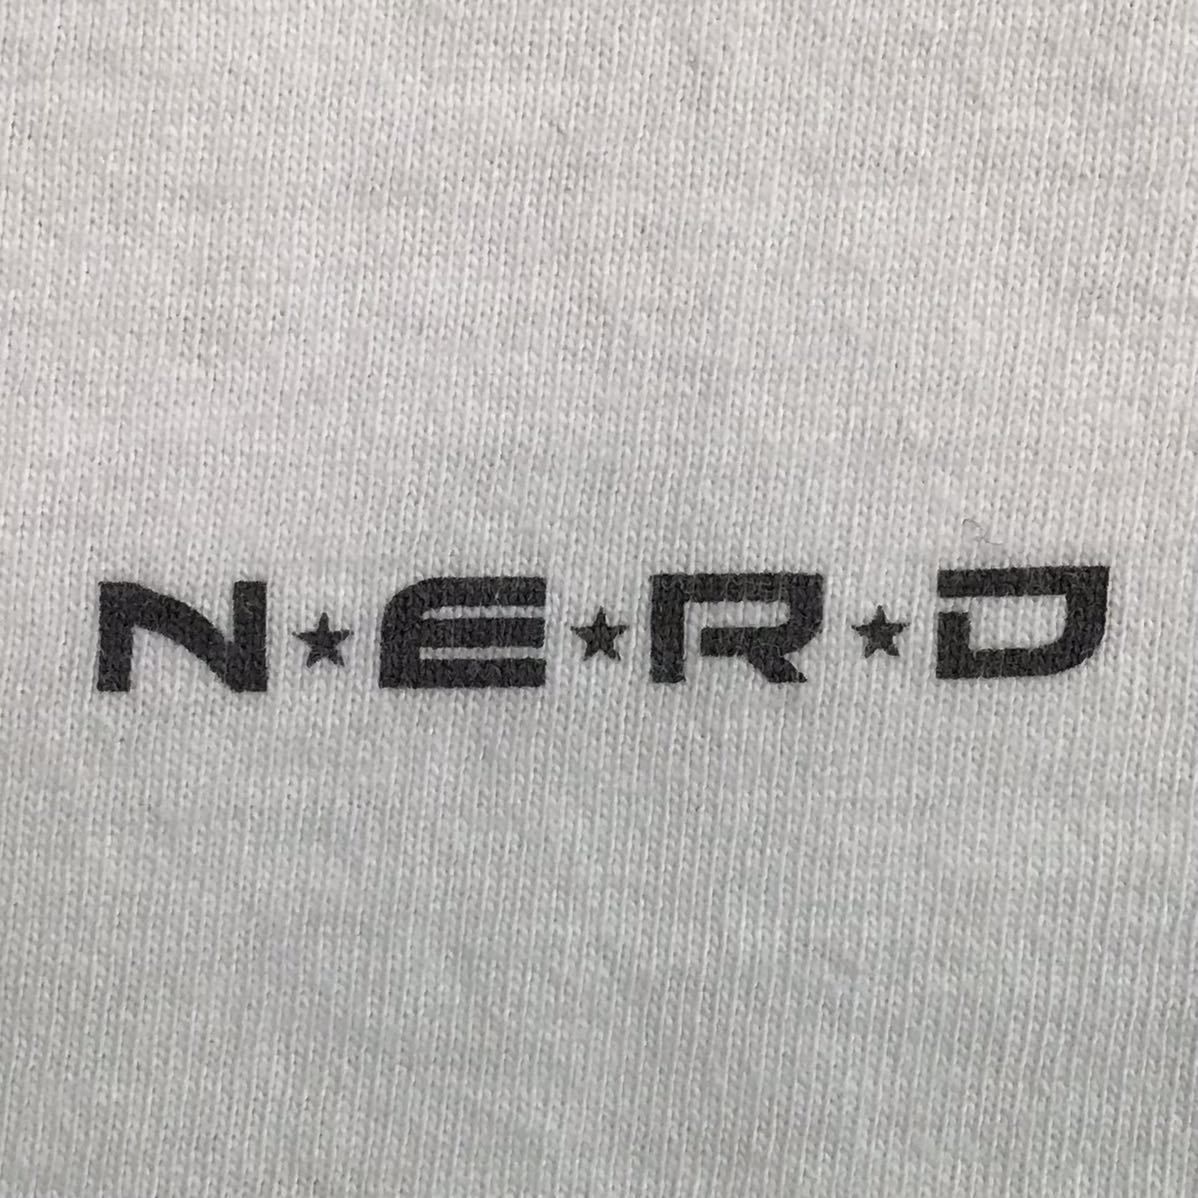 ★激レア★ N.E.R.D × BAPE Tシャツ Lサイズ a bathing ape NERD pharrell THE NEPTUNES  star trak エイプ ベイプ アベイシングエイプ NIGO